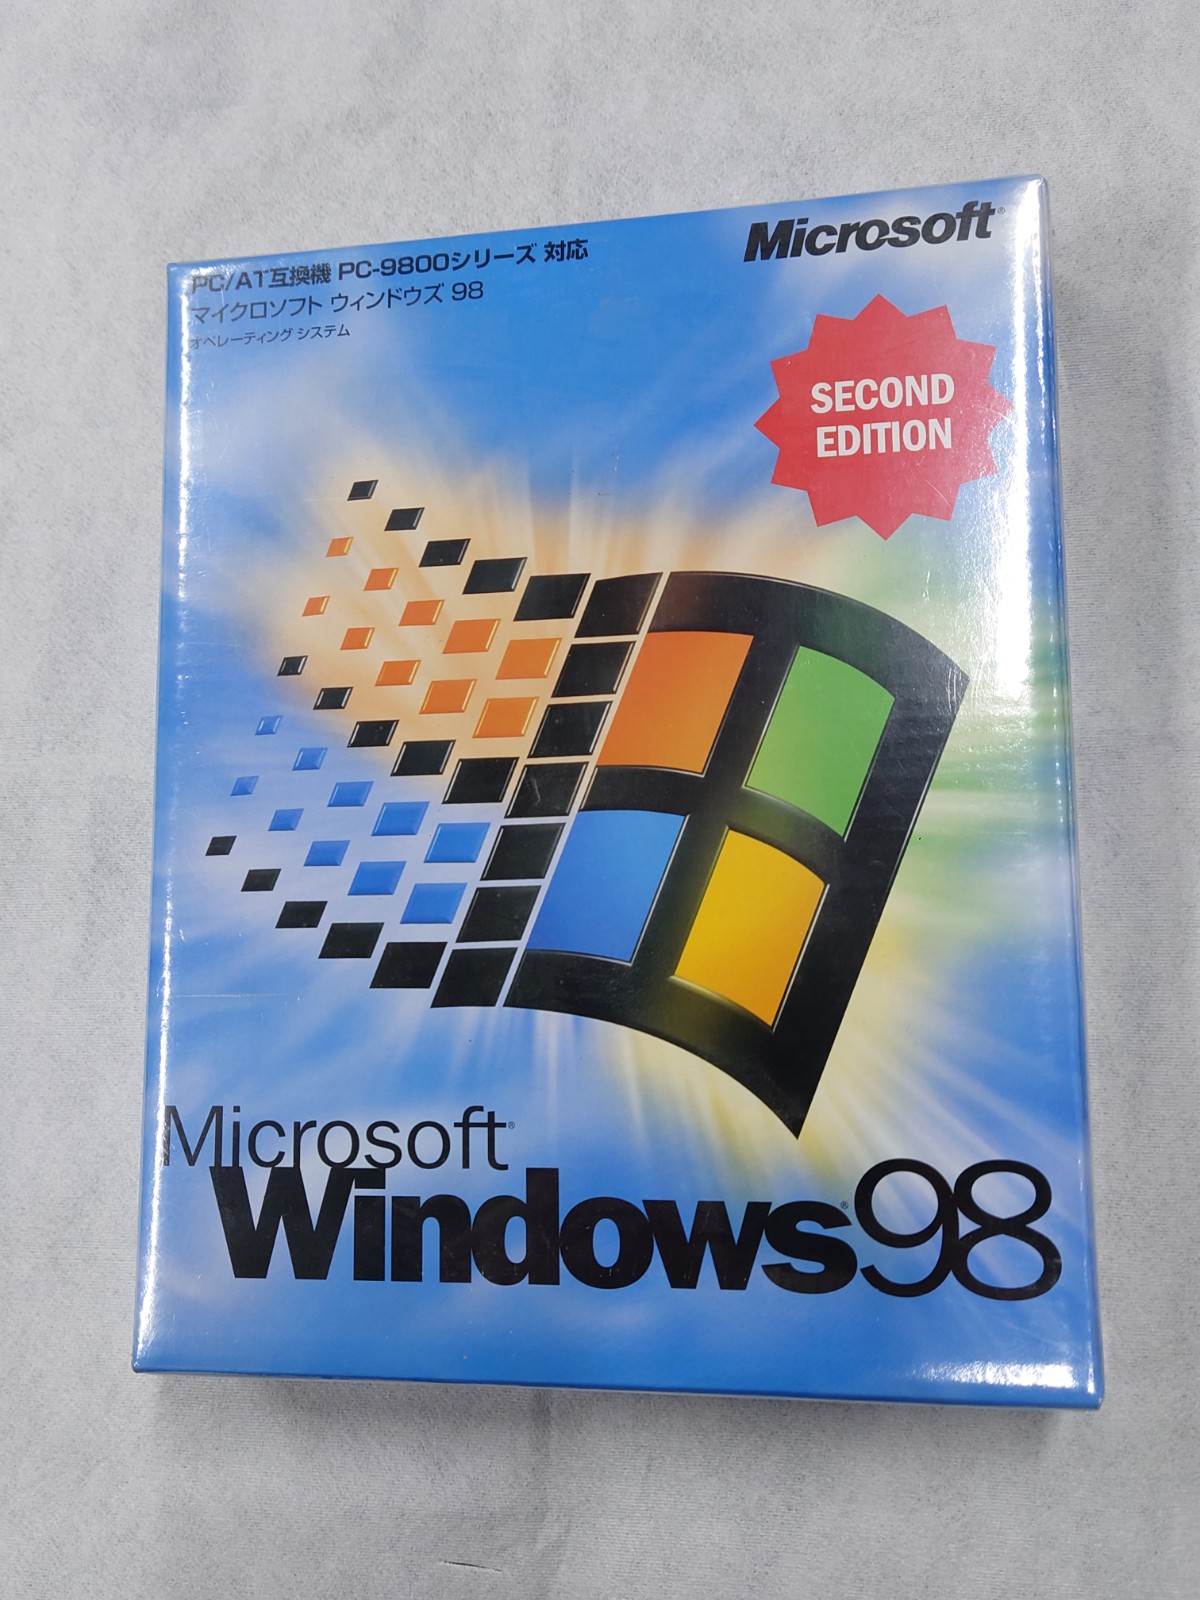 Microsoft Windows98 Second Edition (Japanese Version)